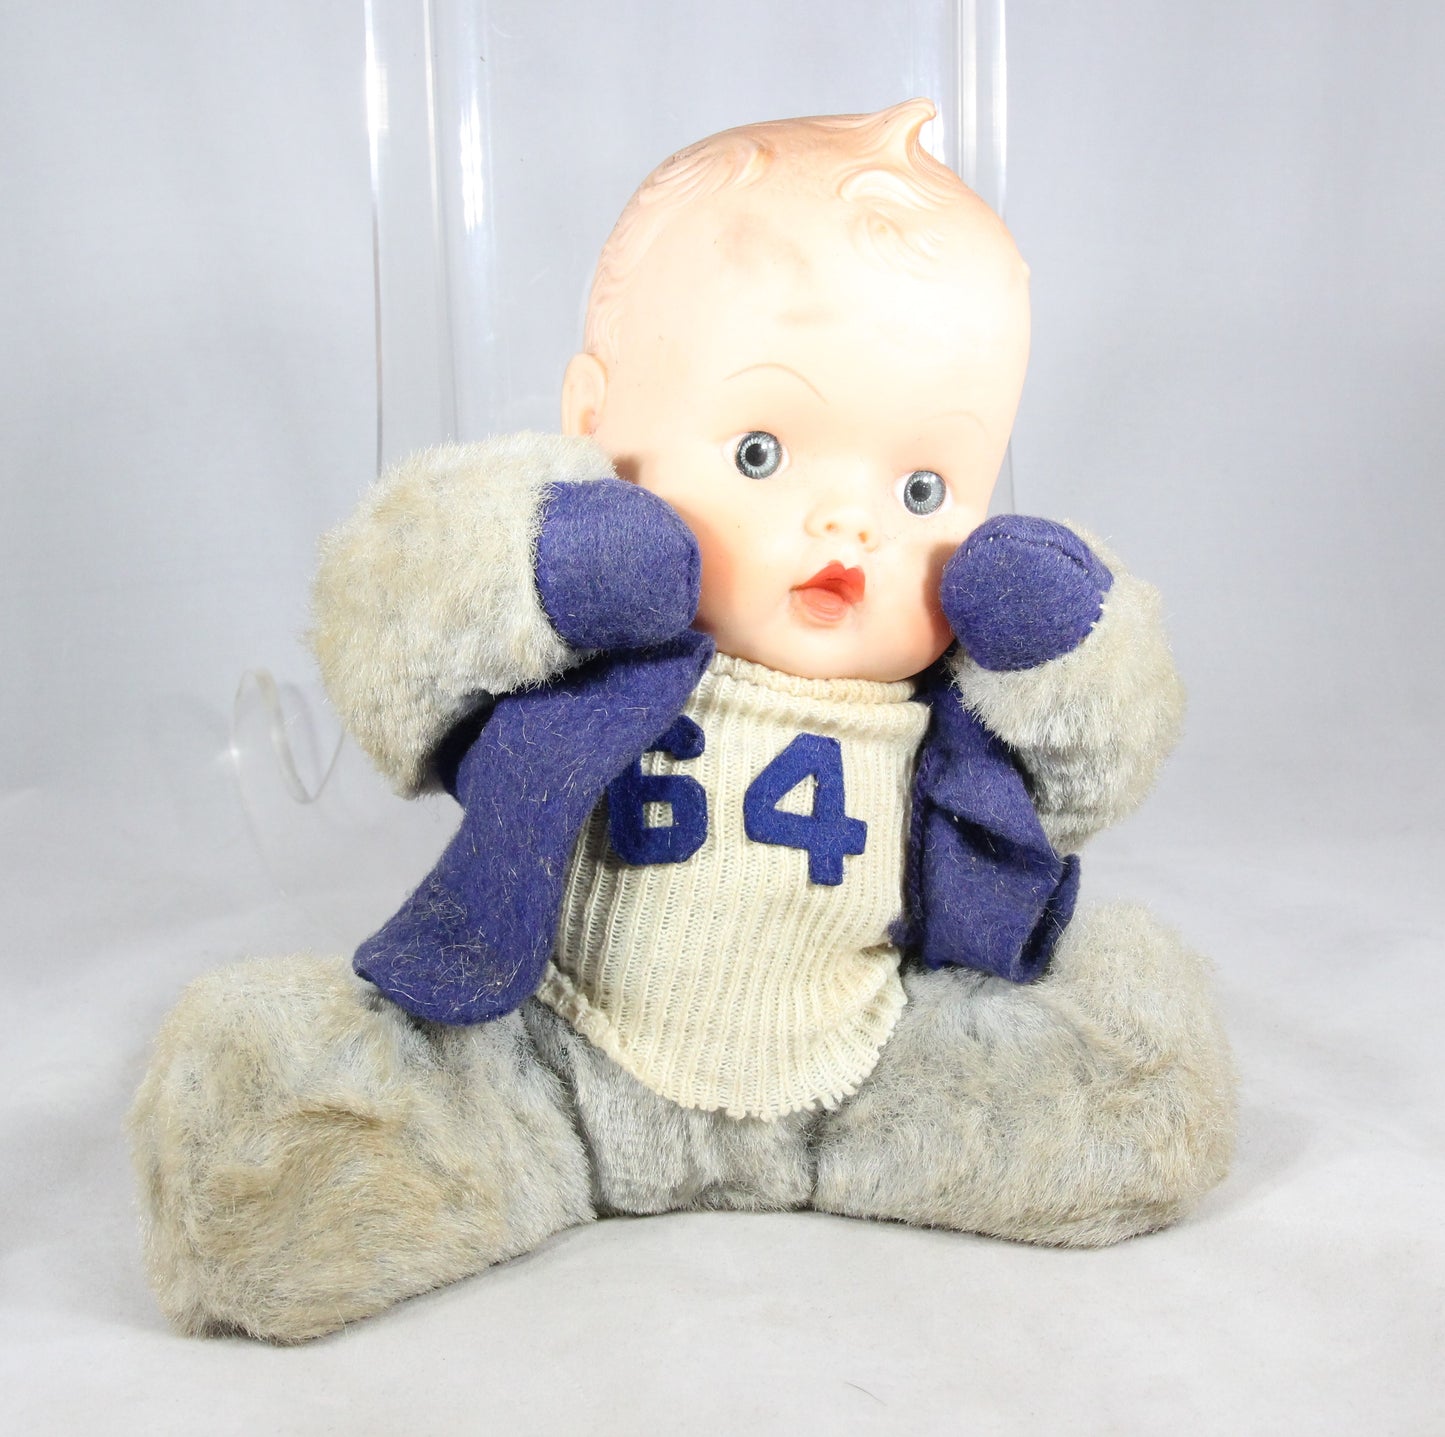 Half Baby Half Teddy Bear #64 Stuffed Animal